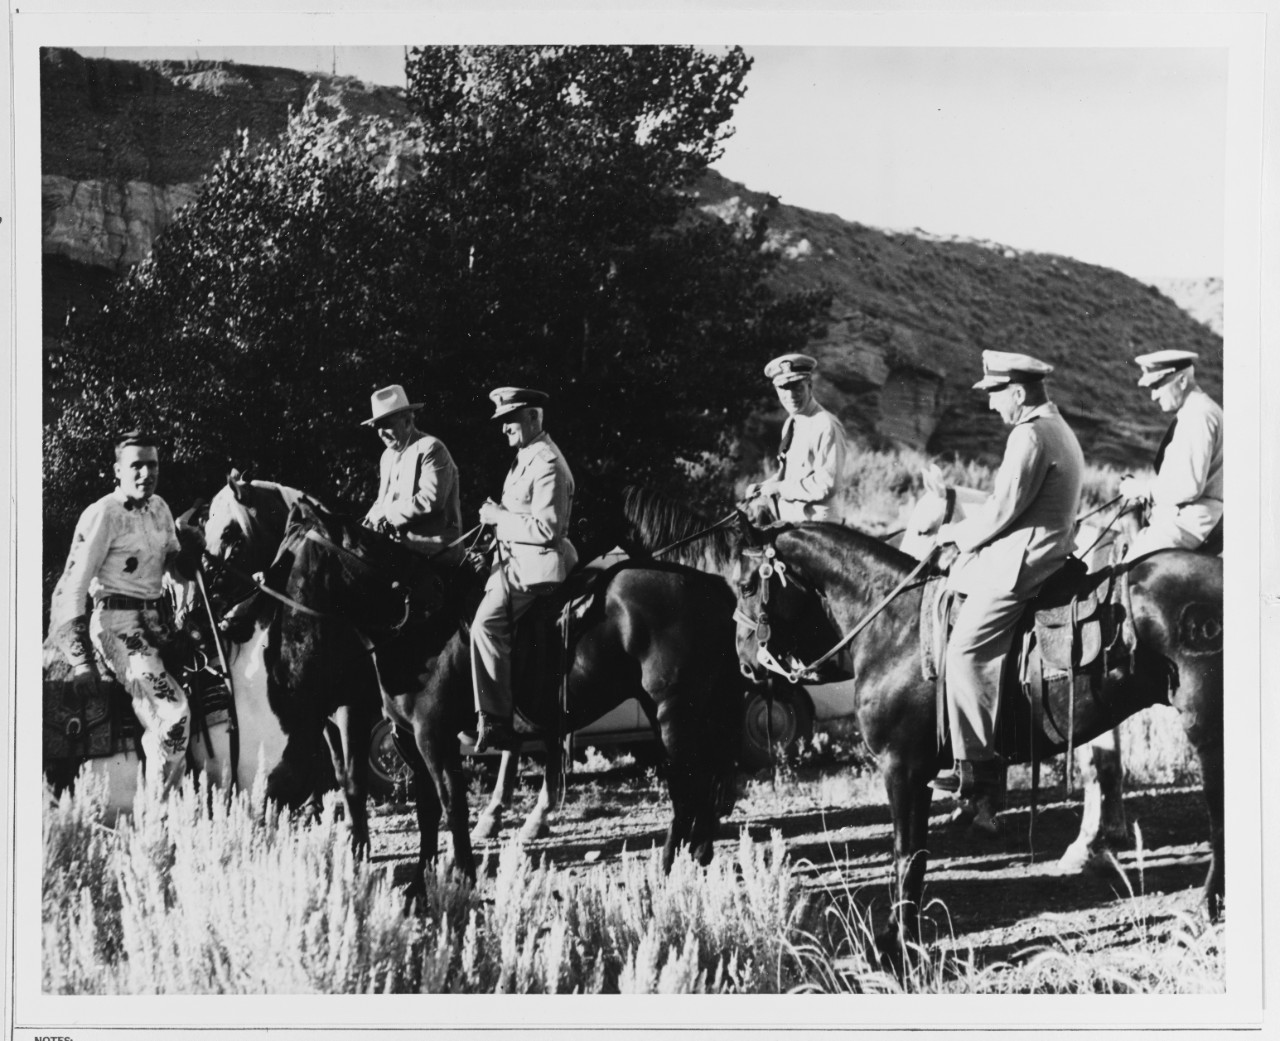 Fleet Admiral Nimitz and other Officers Enjoy a Horseback Ride